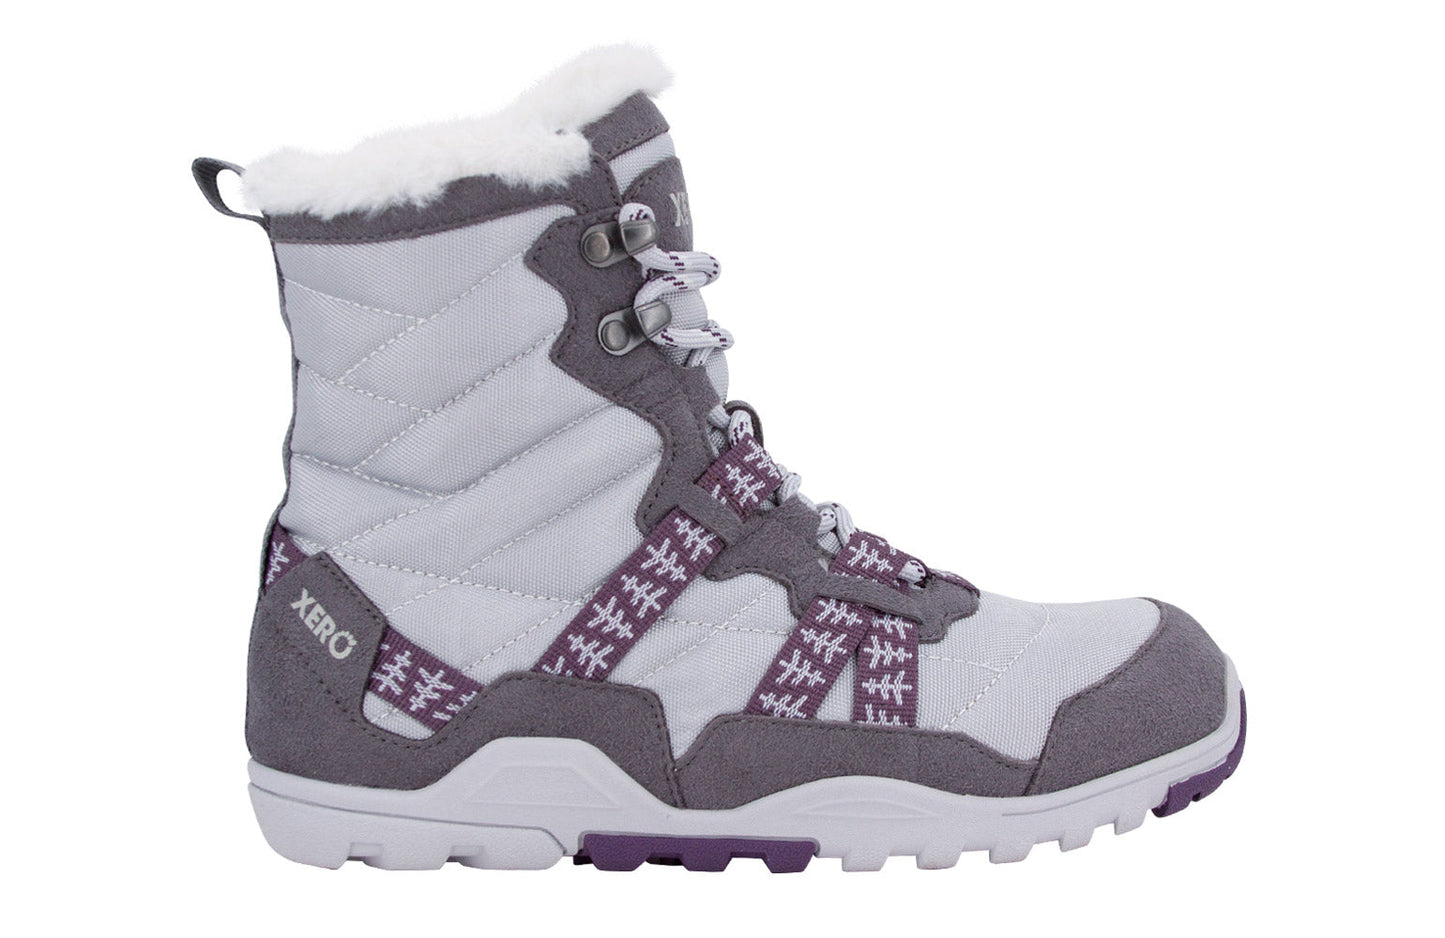 Xero Shoes Alpine Womens barfods vinterstøvler til kvinder i farven frost, yderside